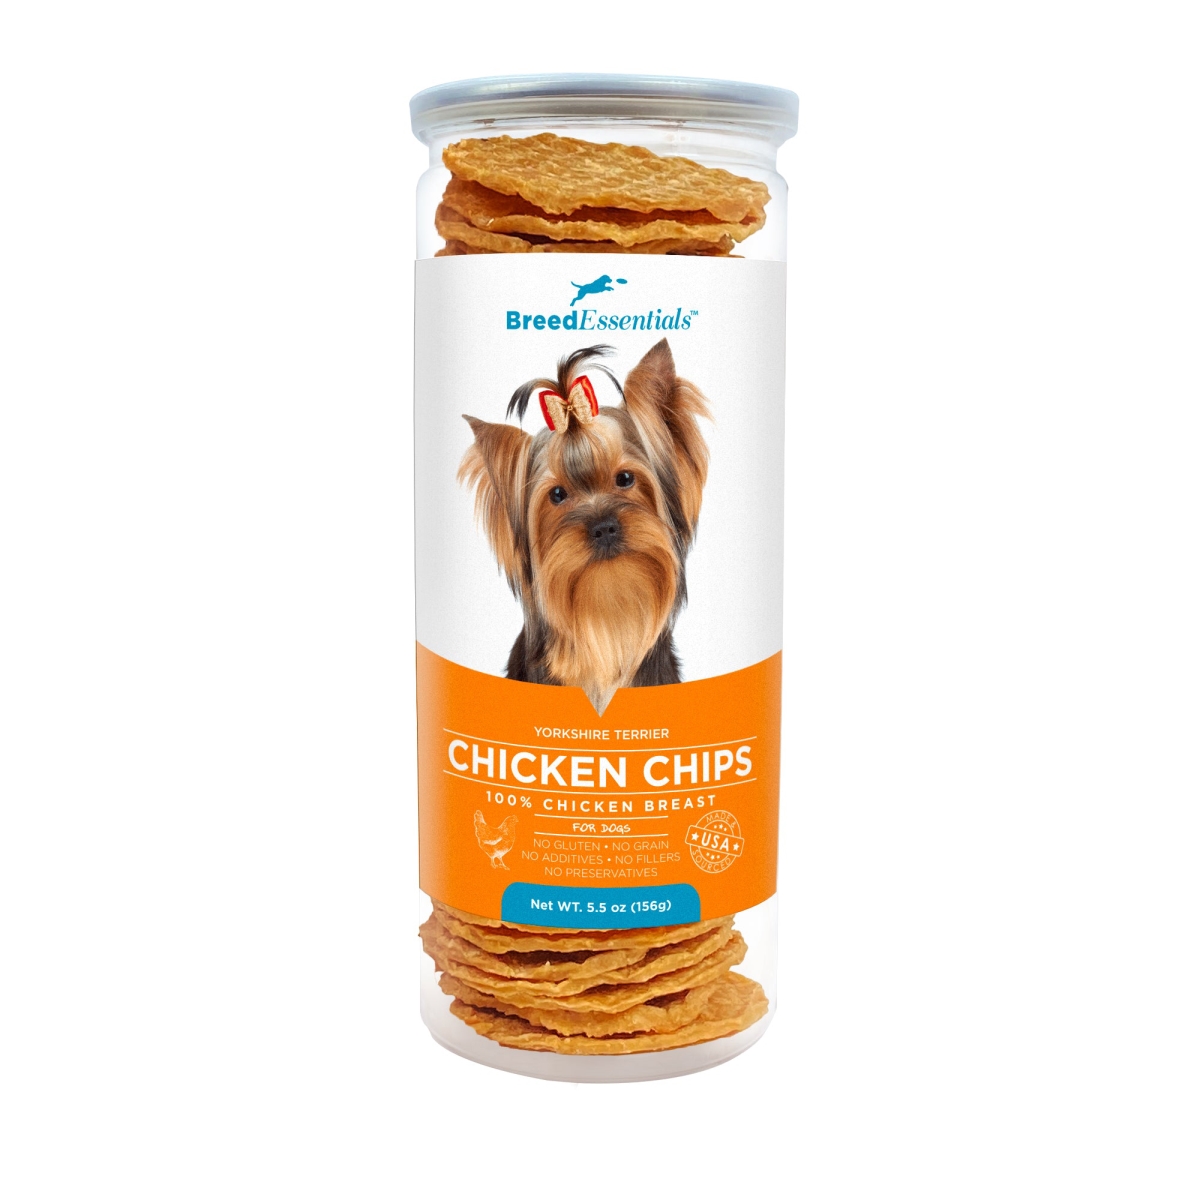 Picture of Breed Essentials 197247000228 5.5 oz Chicken Chips - Yorkshire Terrier